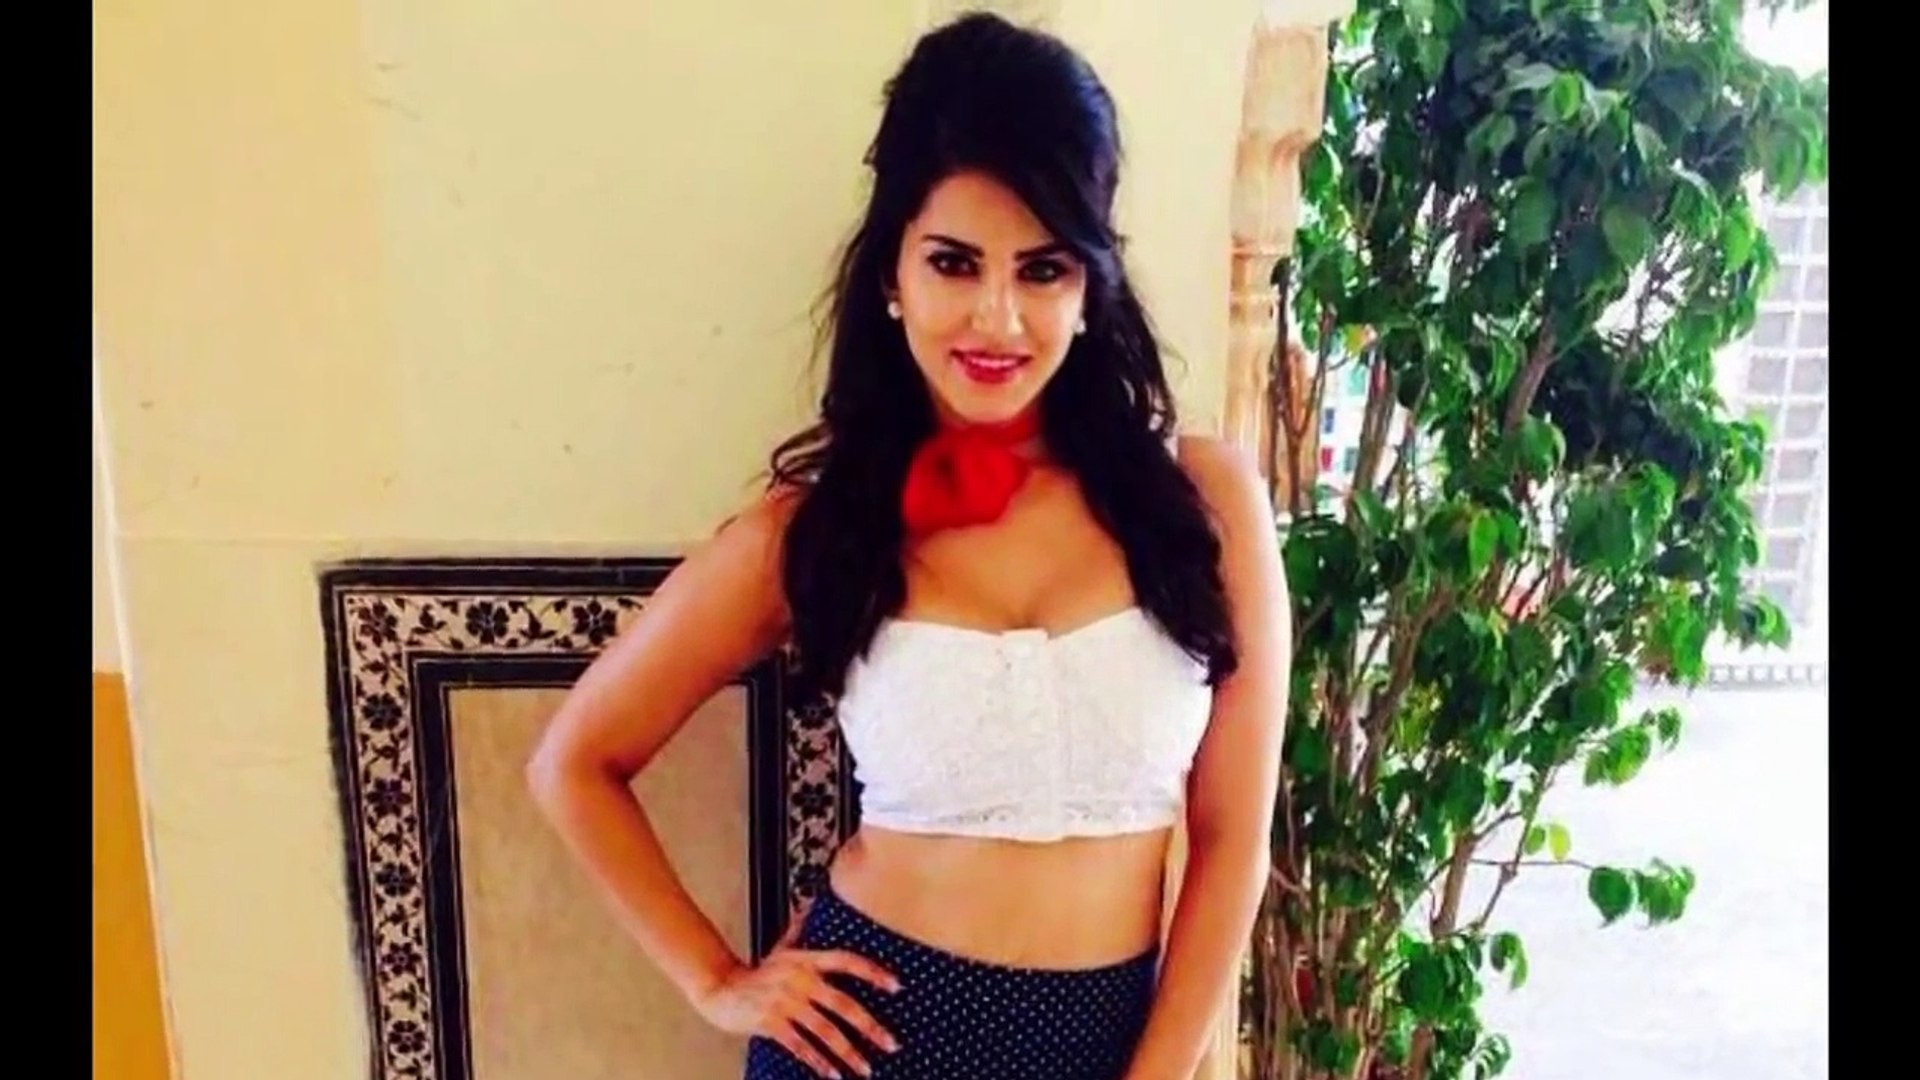 Mamta Kulkarni Ki Chudai Video - Porn Star Sunny Leone to Play Mamta Kulkarni | New Bollywood Movies News  2014 - Dailymotion Video